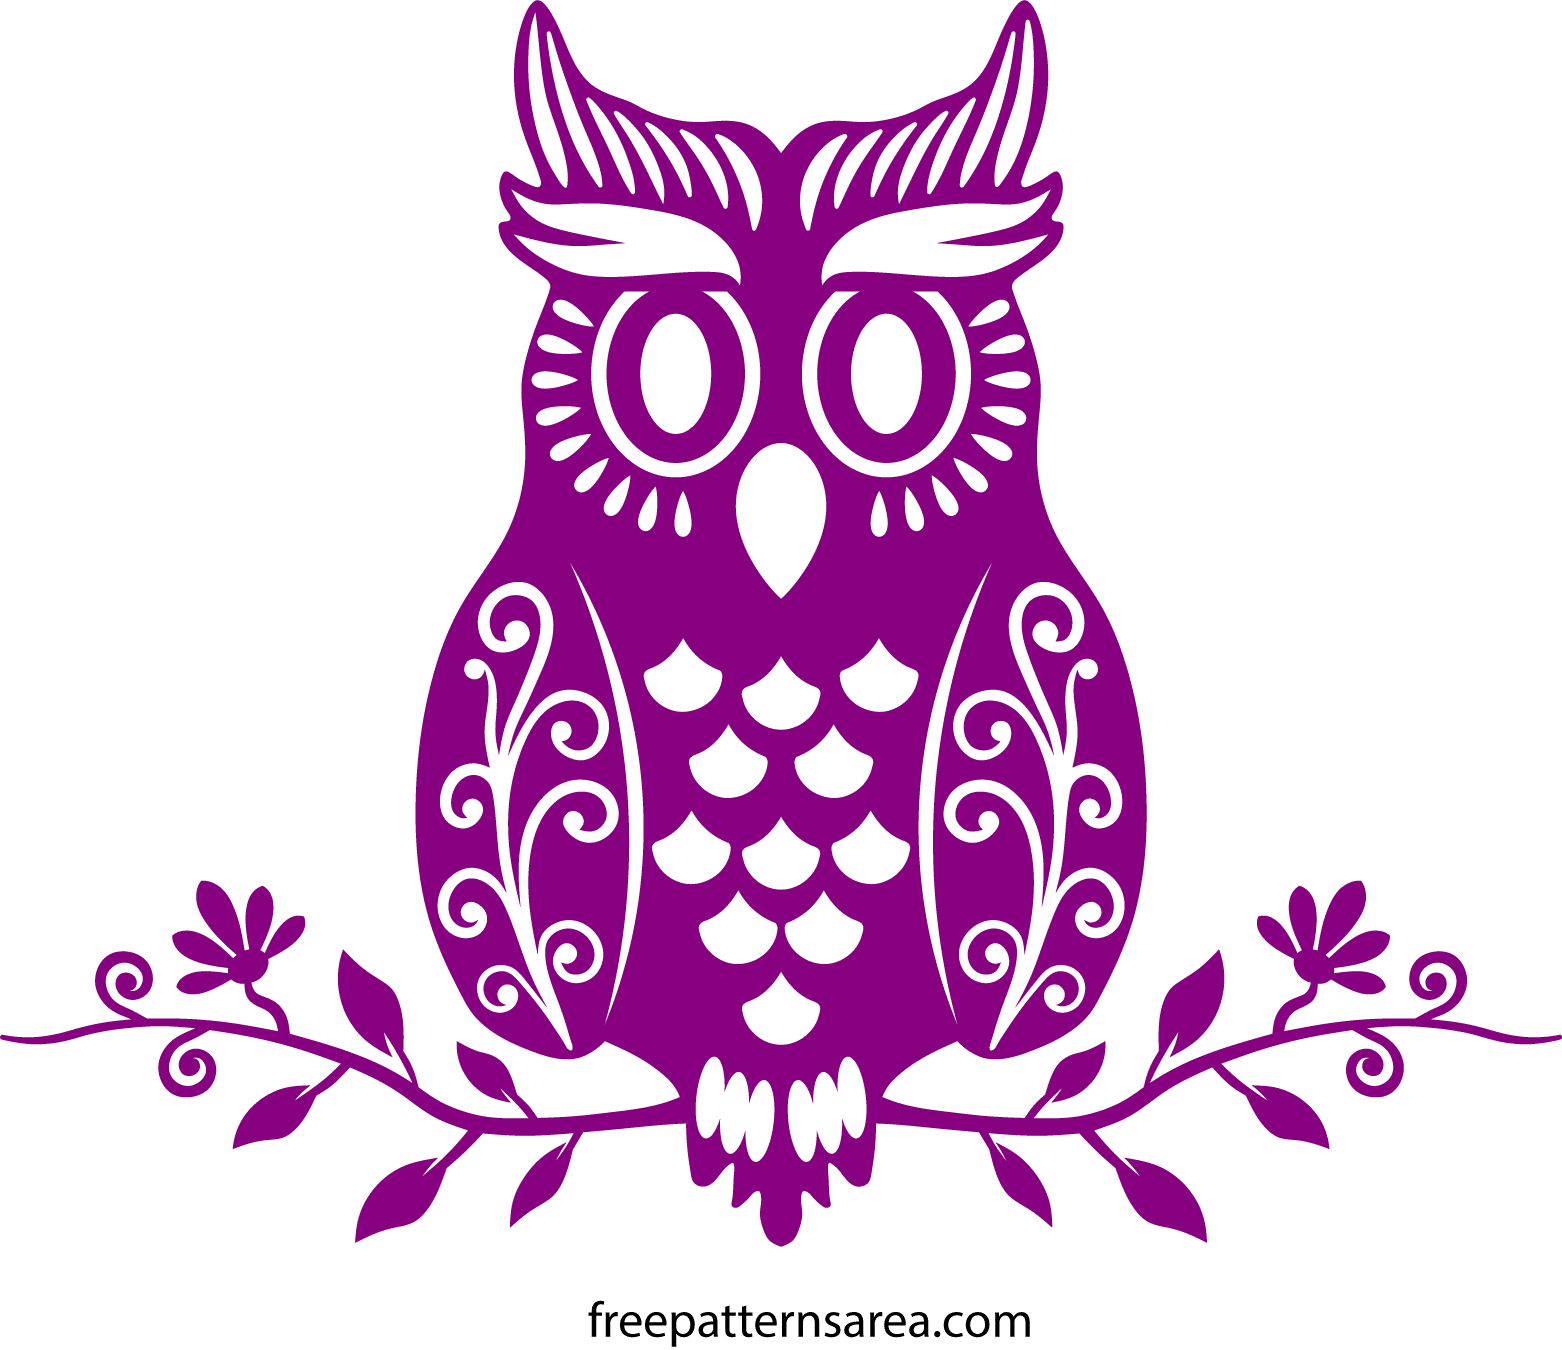 Download Cute Owl Vector Art Cutting Template | FreePatternsArea